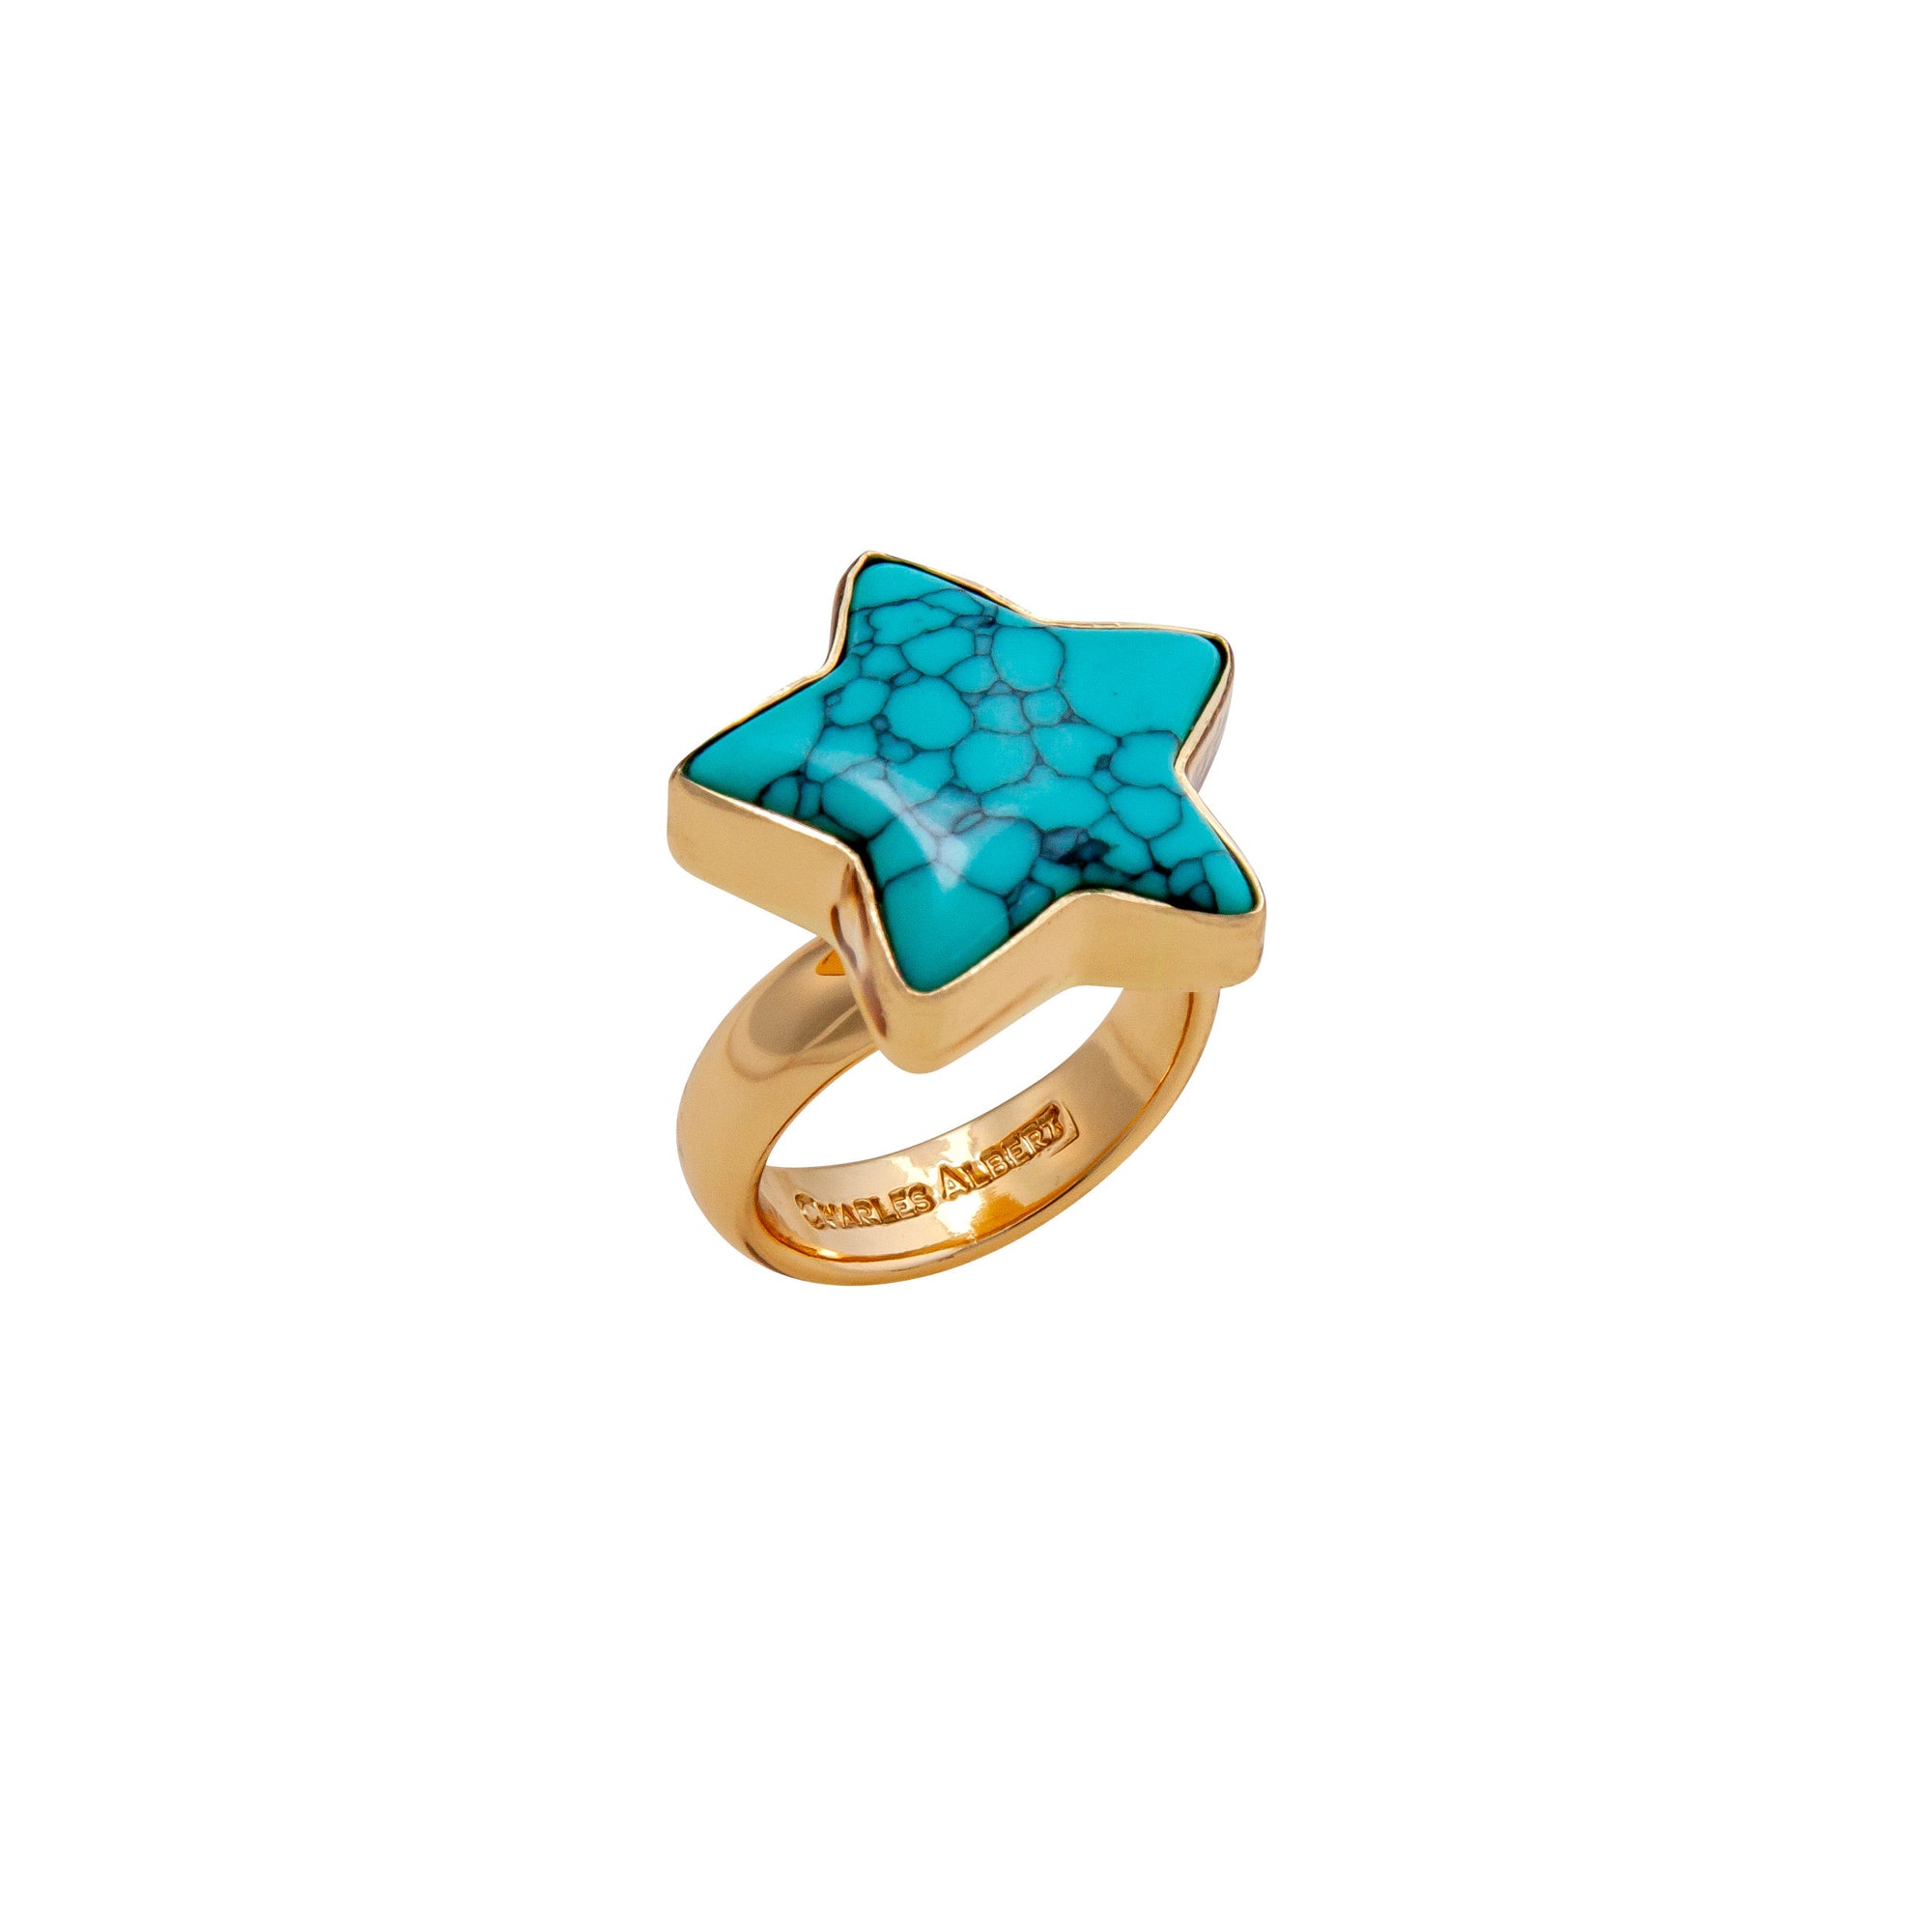 Alchemia Howlite Star Adjustable Ring / Charles Albert Jewelry